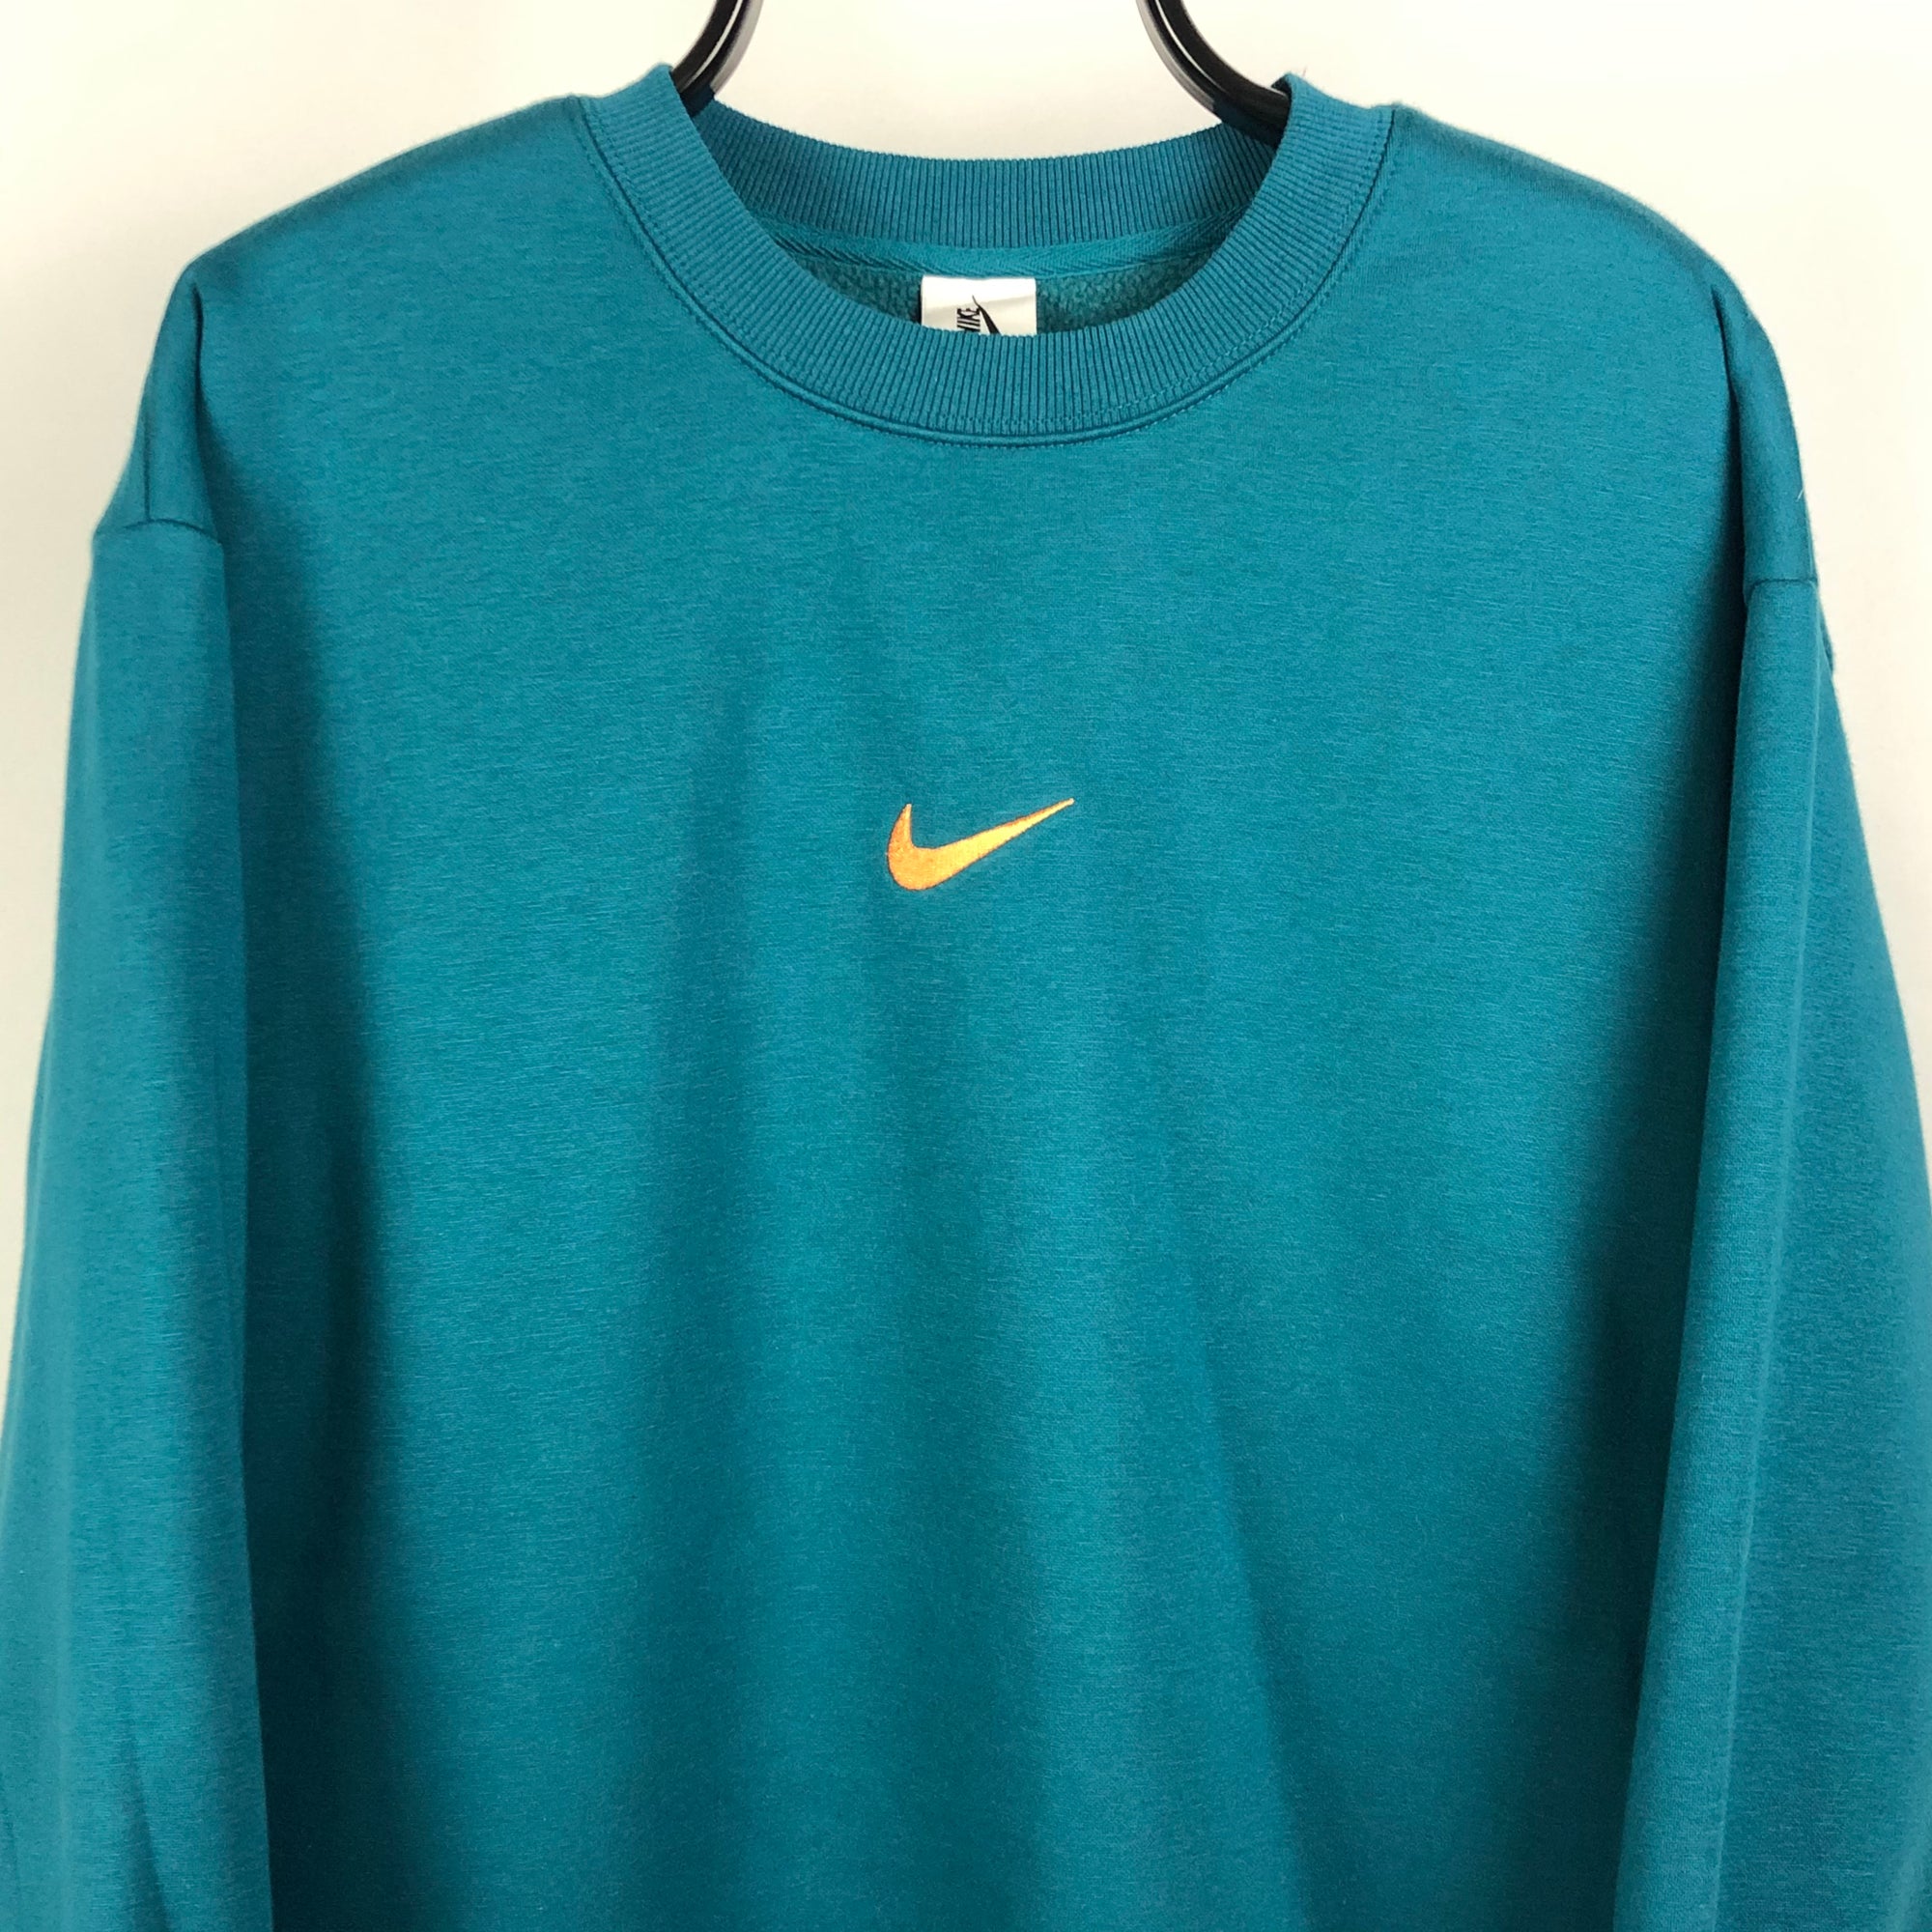 Nike Embroidered Centre Swoosh Sweatshirt in Petrol Blue/Bronze - Men's Medium/Women's Large